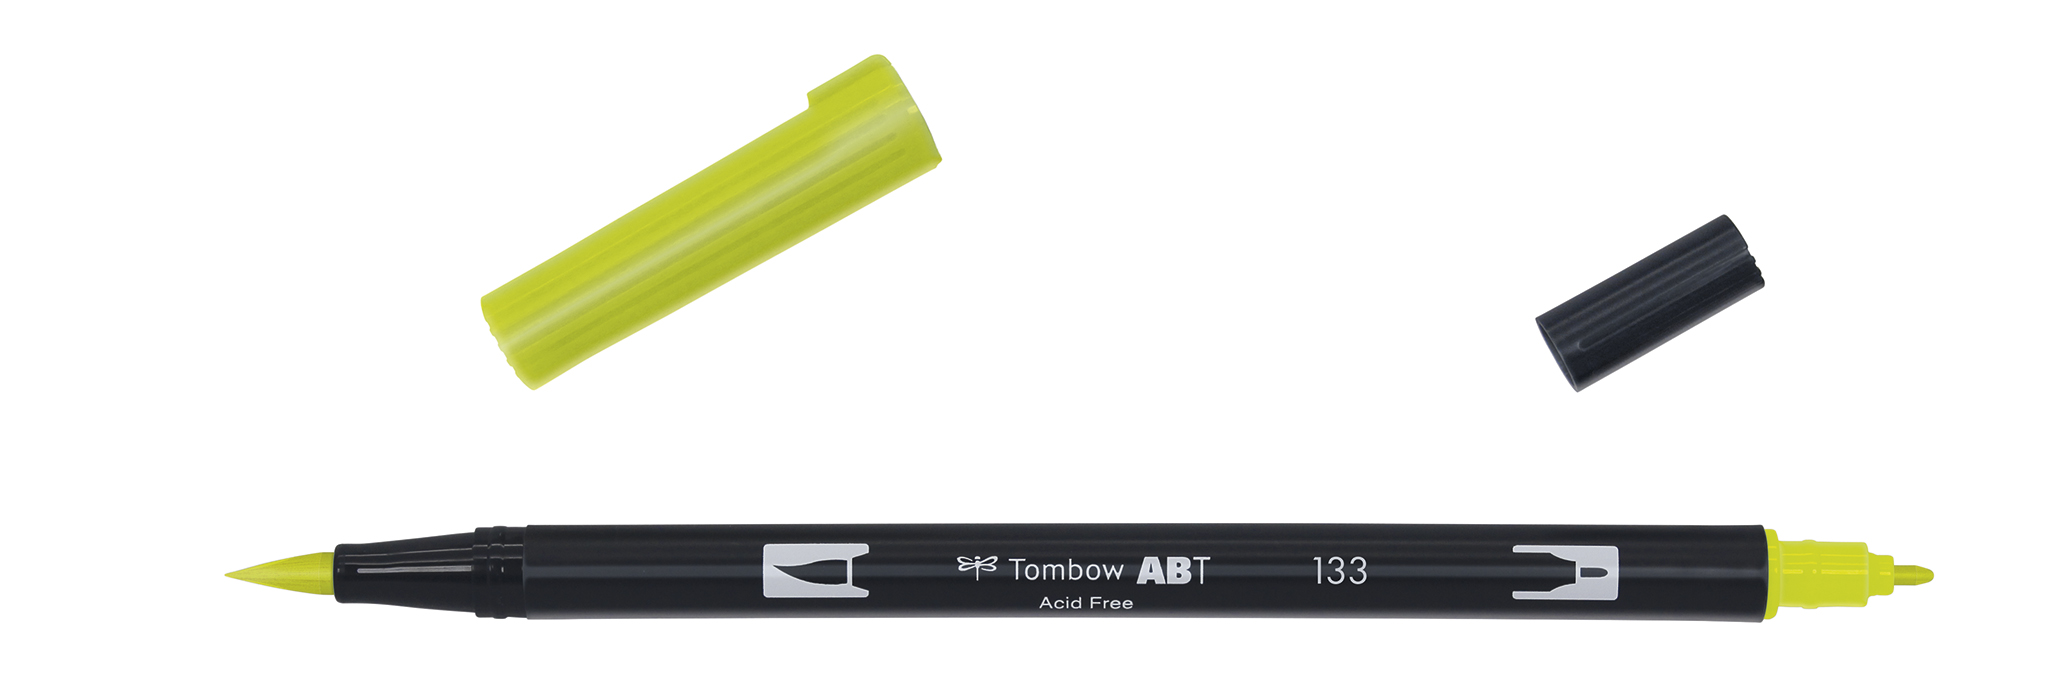 Tombow Art Brush Pen, chartreuse